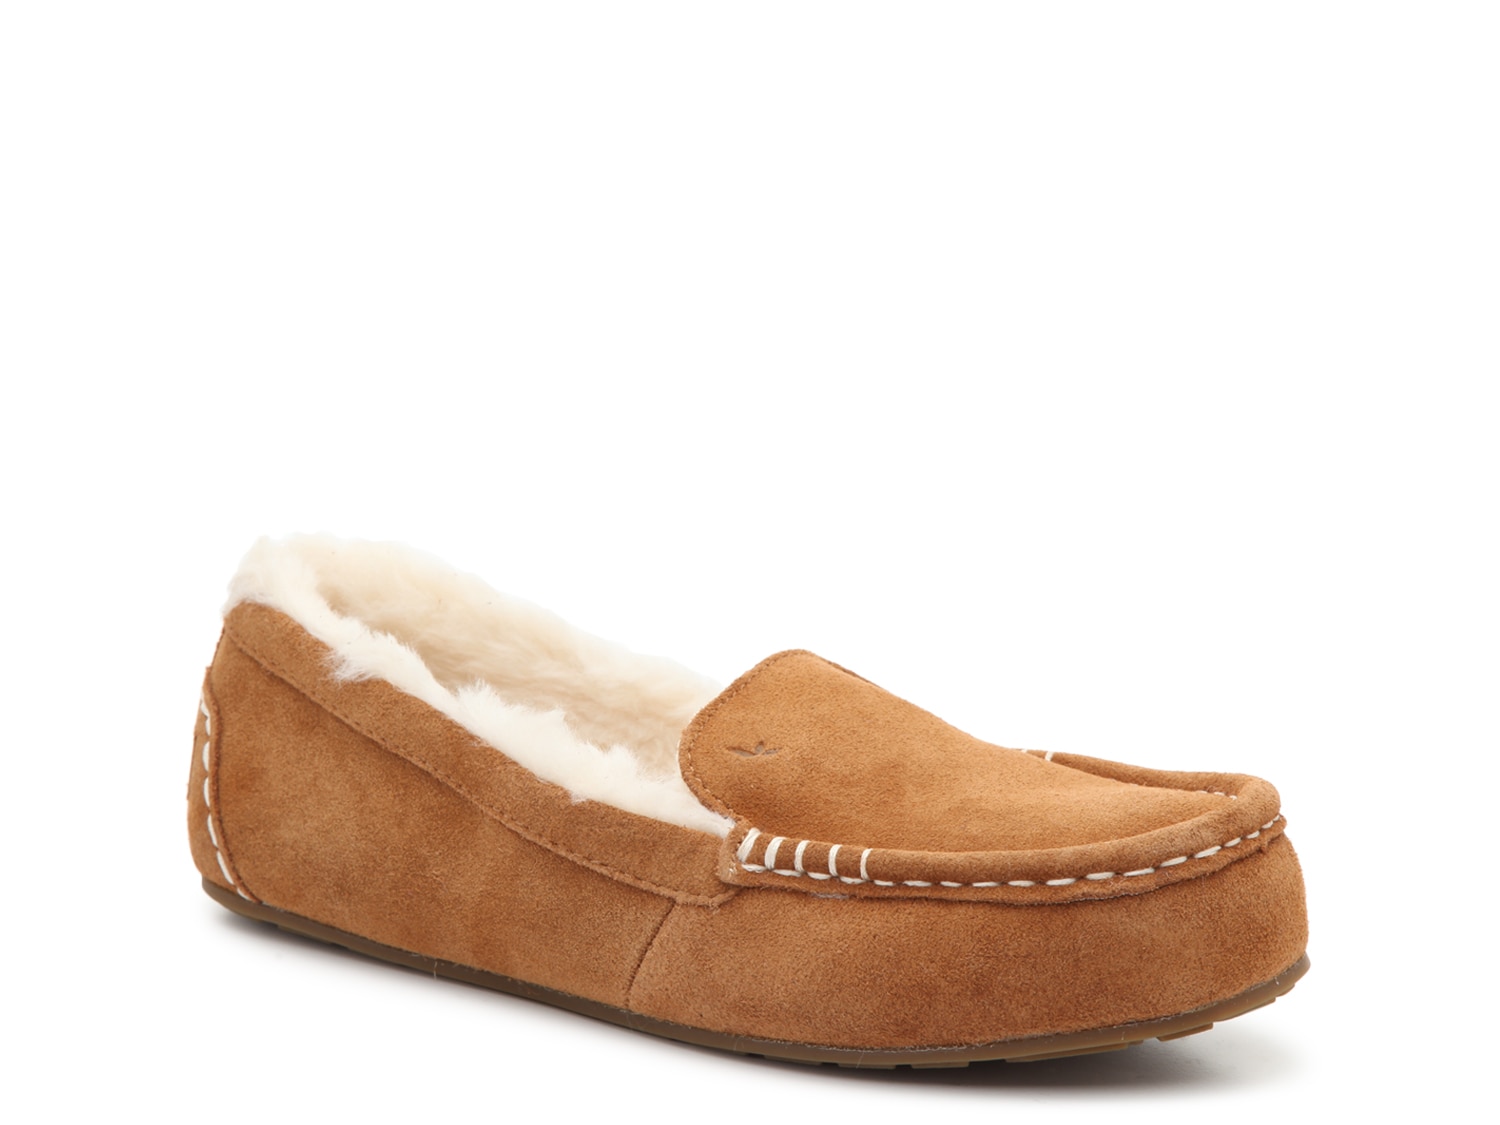 women's koolaburra by ugg slippers